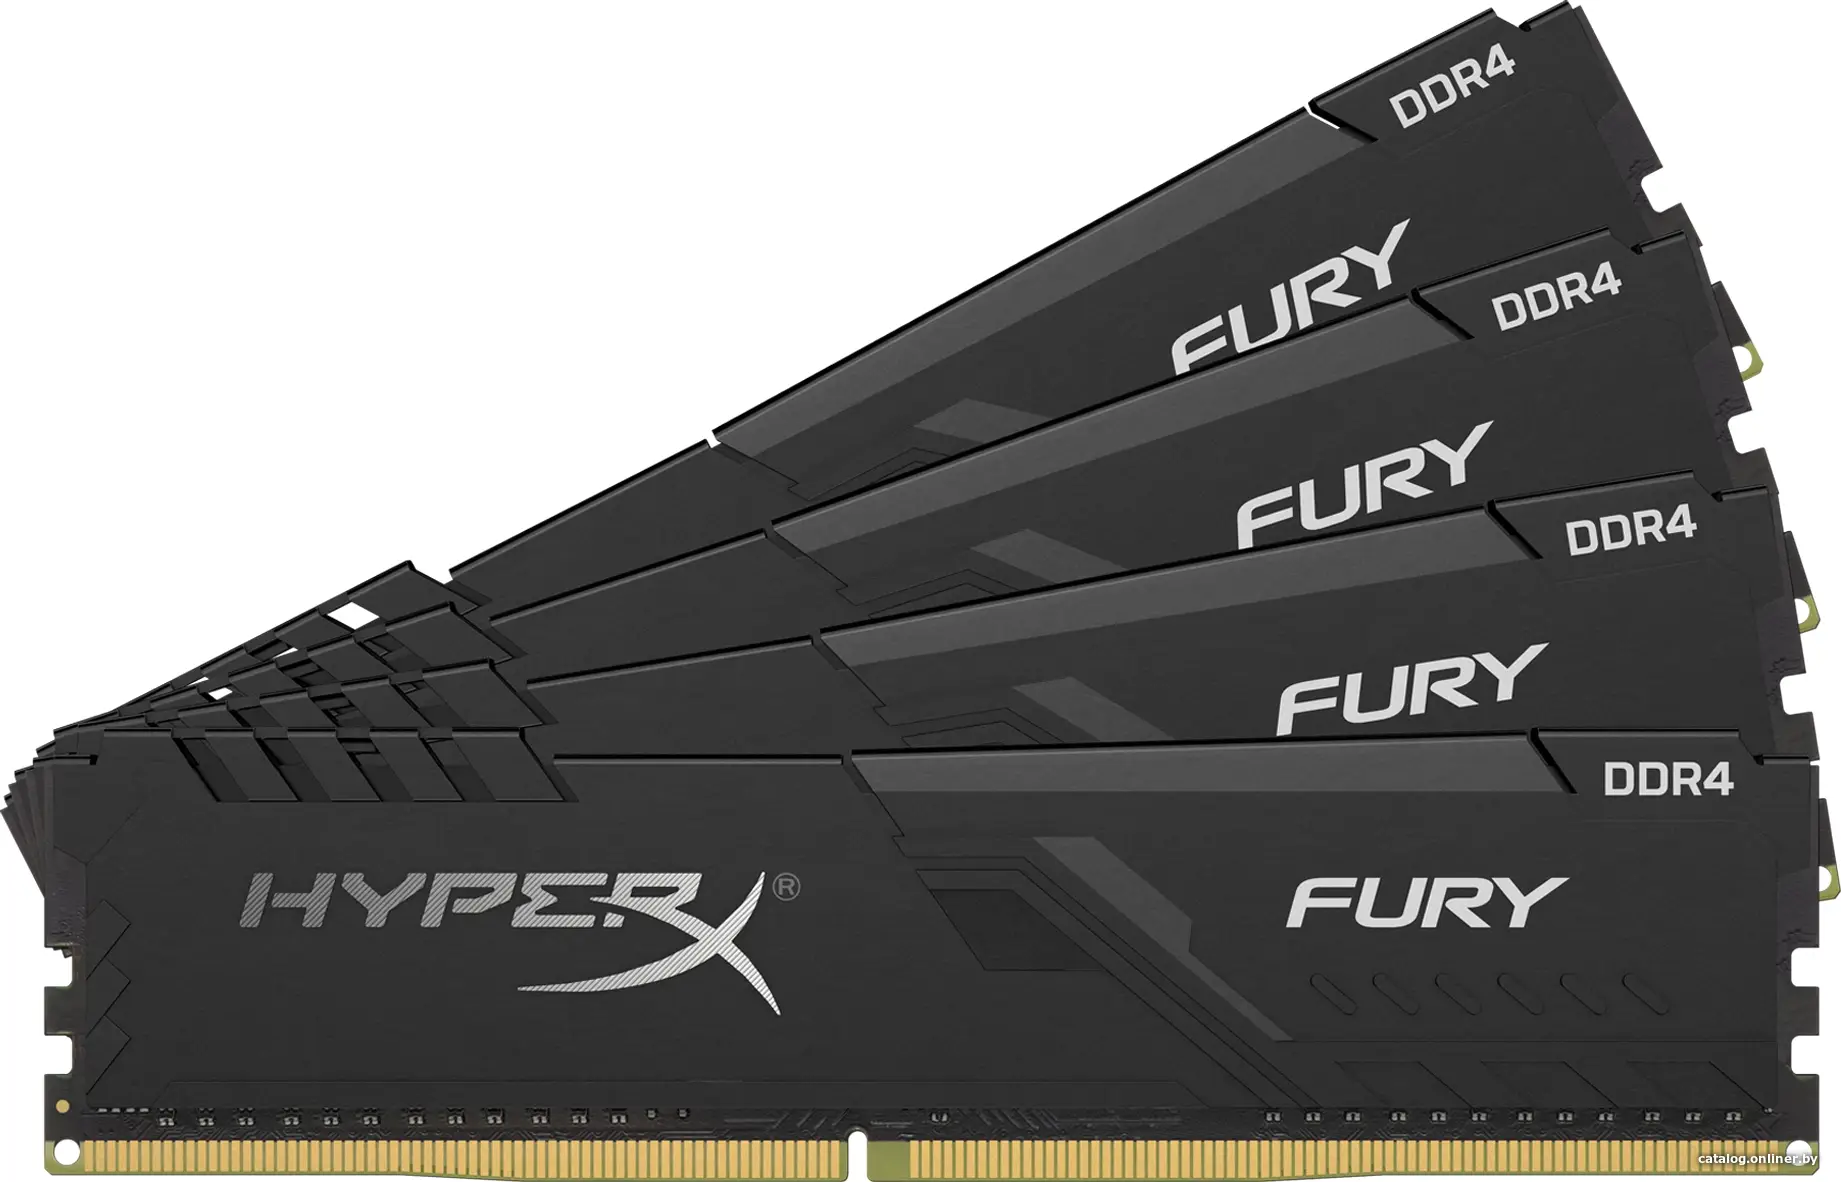 Купить Оперативная память HyperX Fury 8GB DDR4 PC4-28800 HX436C17FB3/8, цена, опт и розница